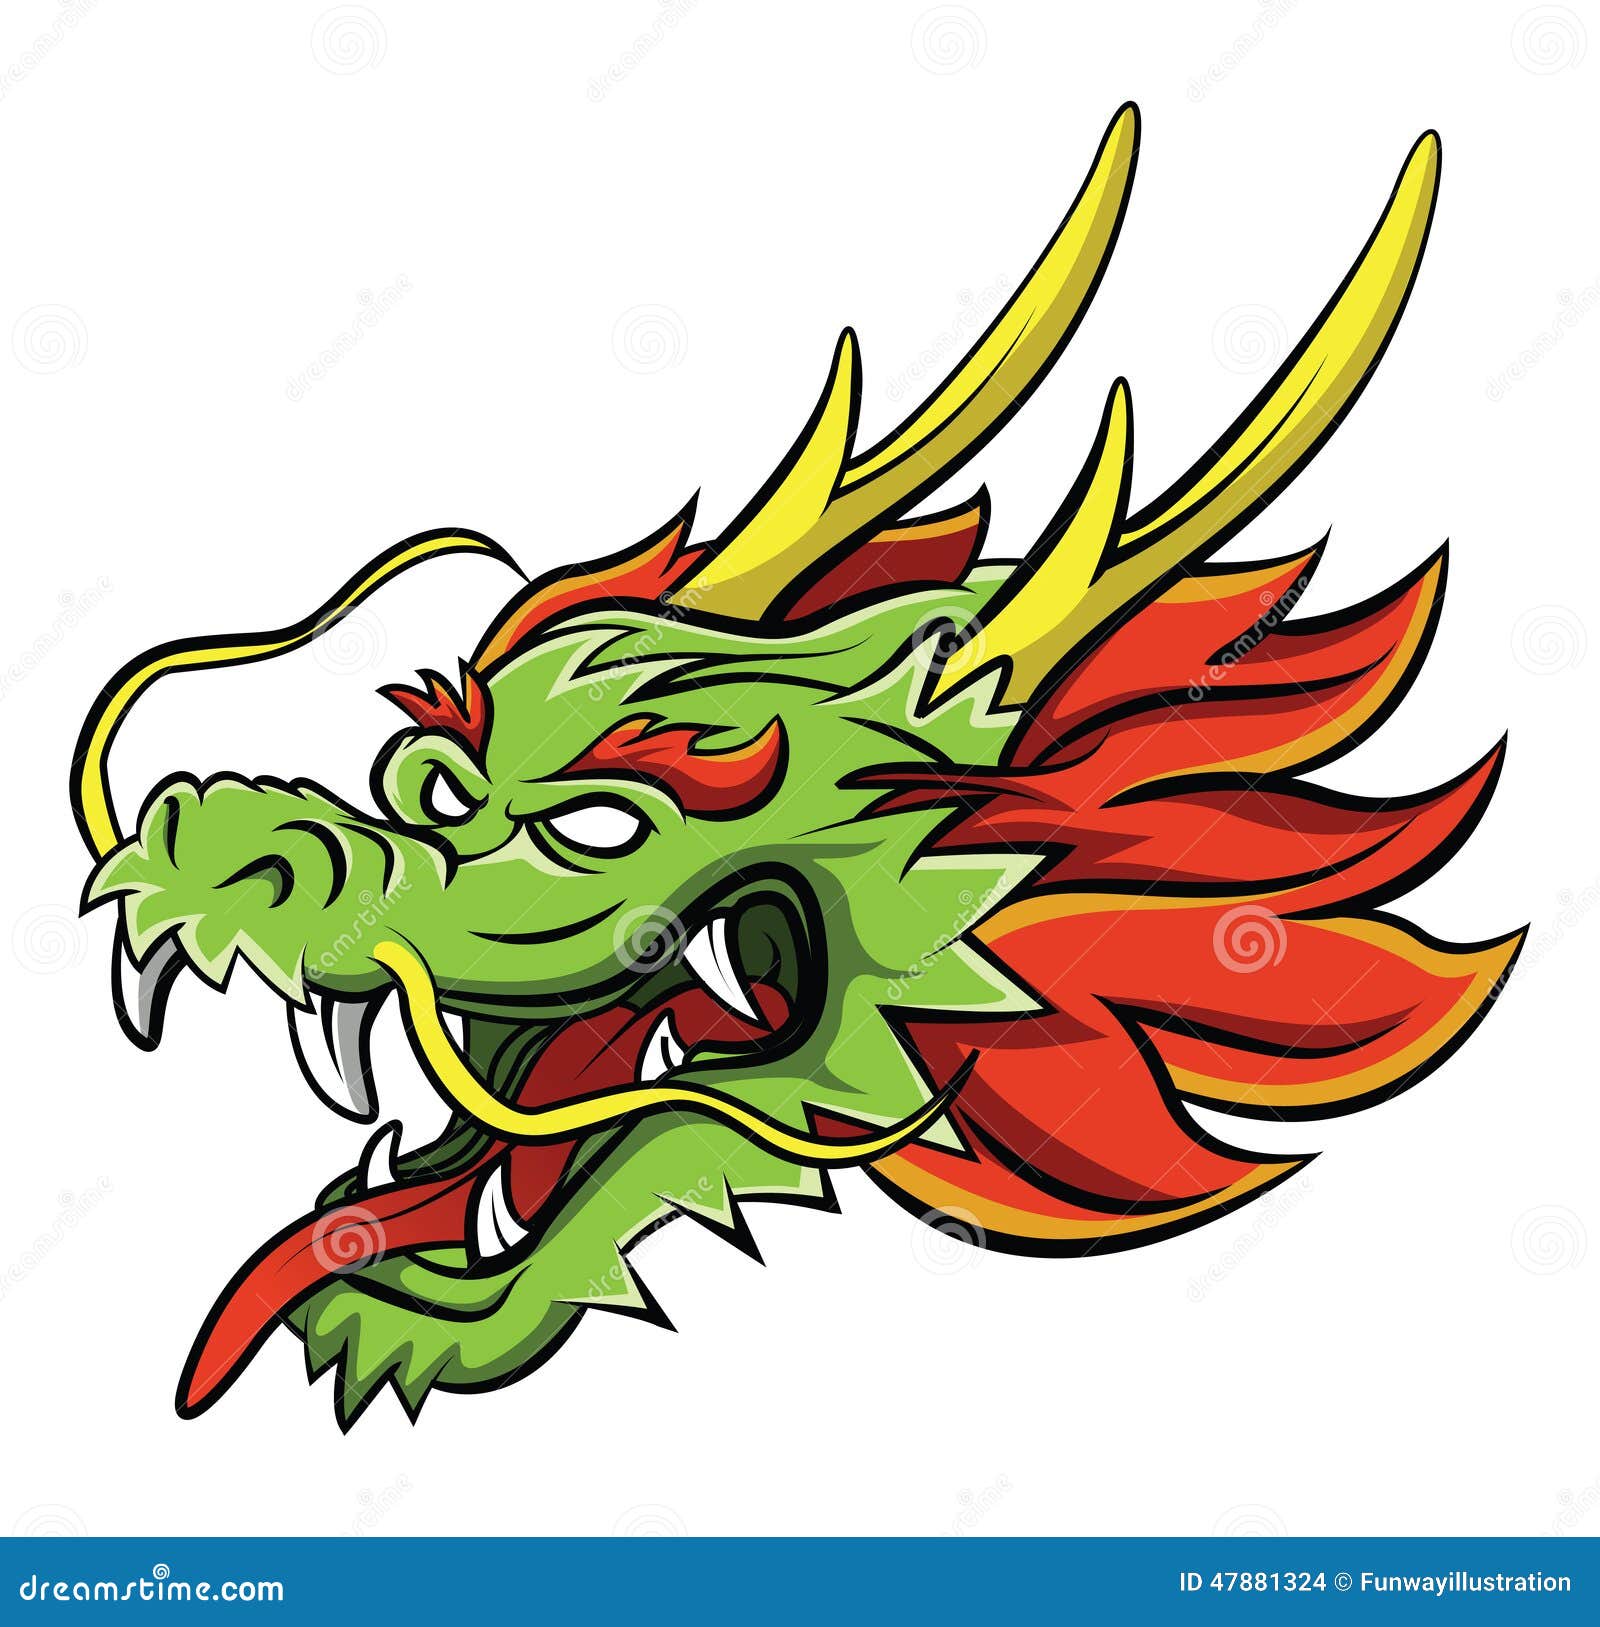 Dragon stock vector. Illustration of asian, character - 47881324